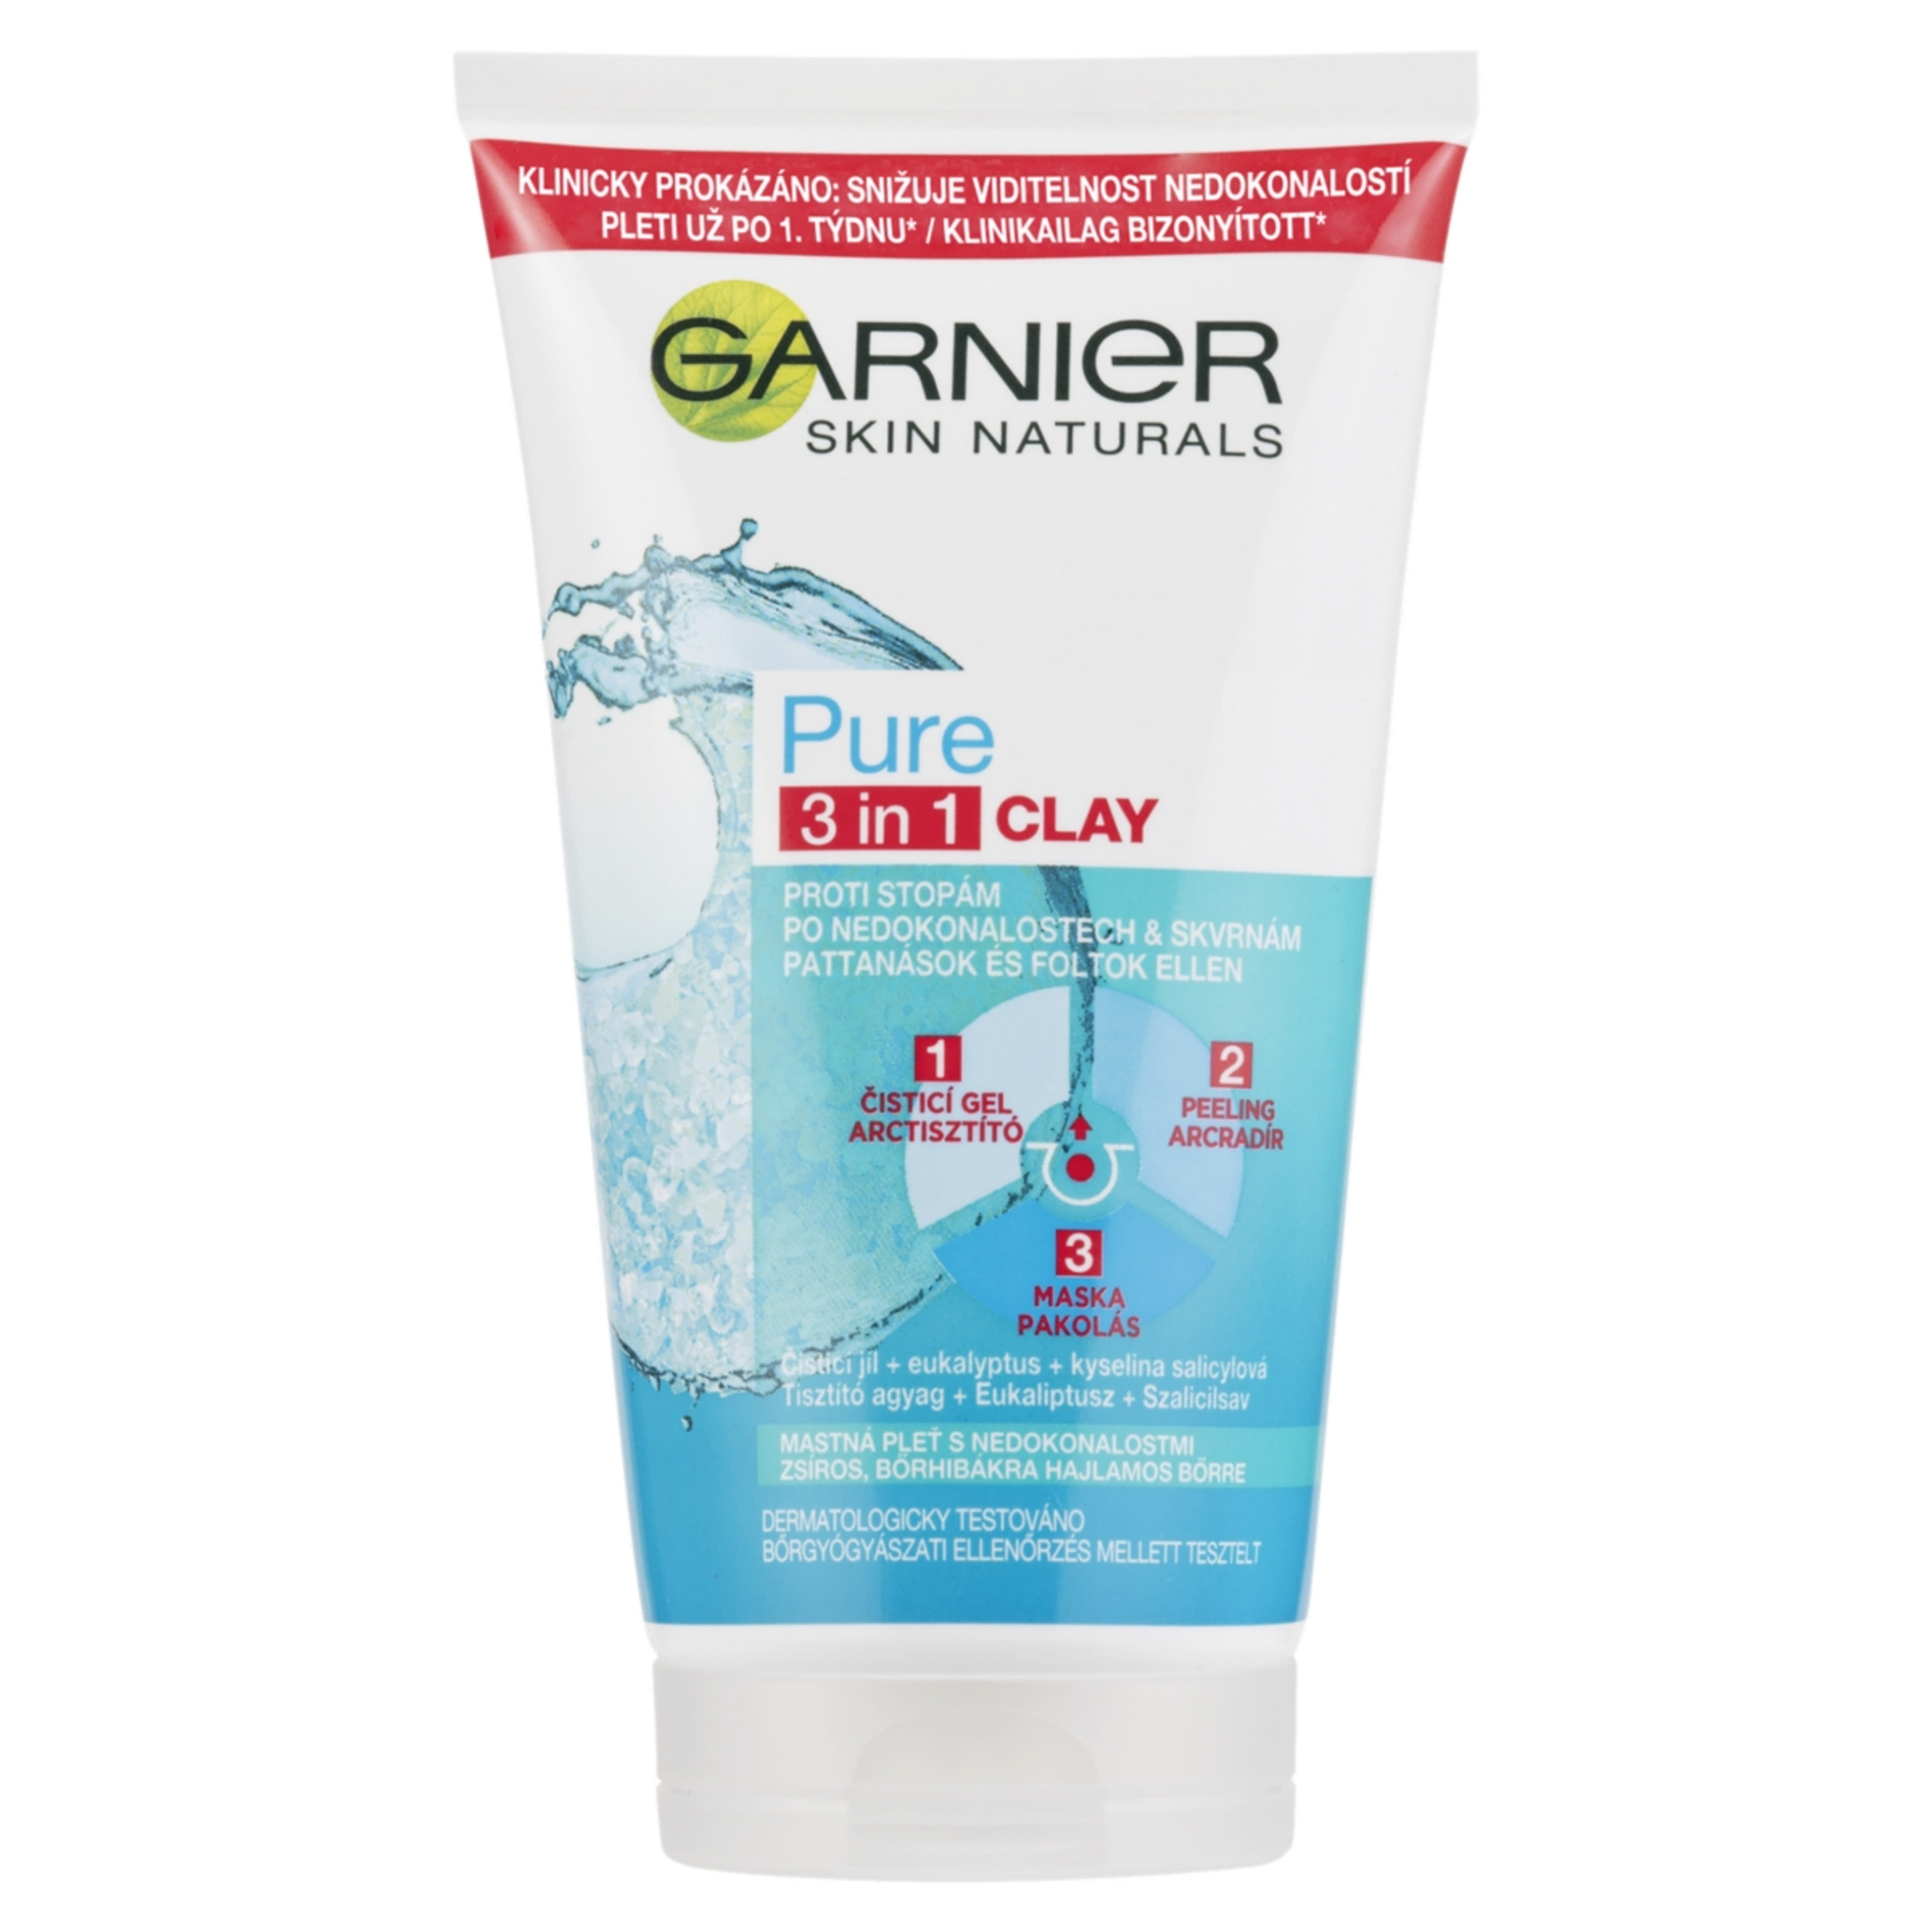 Garnier Skin Naturals Pure 3in1 mélytisztító gél tubus - 150 ml